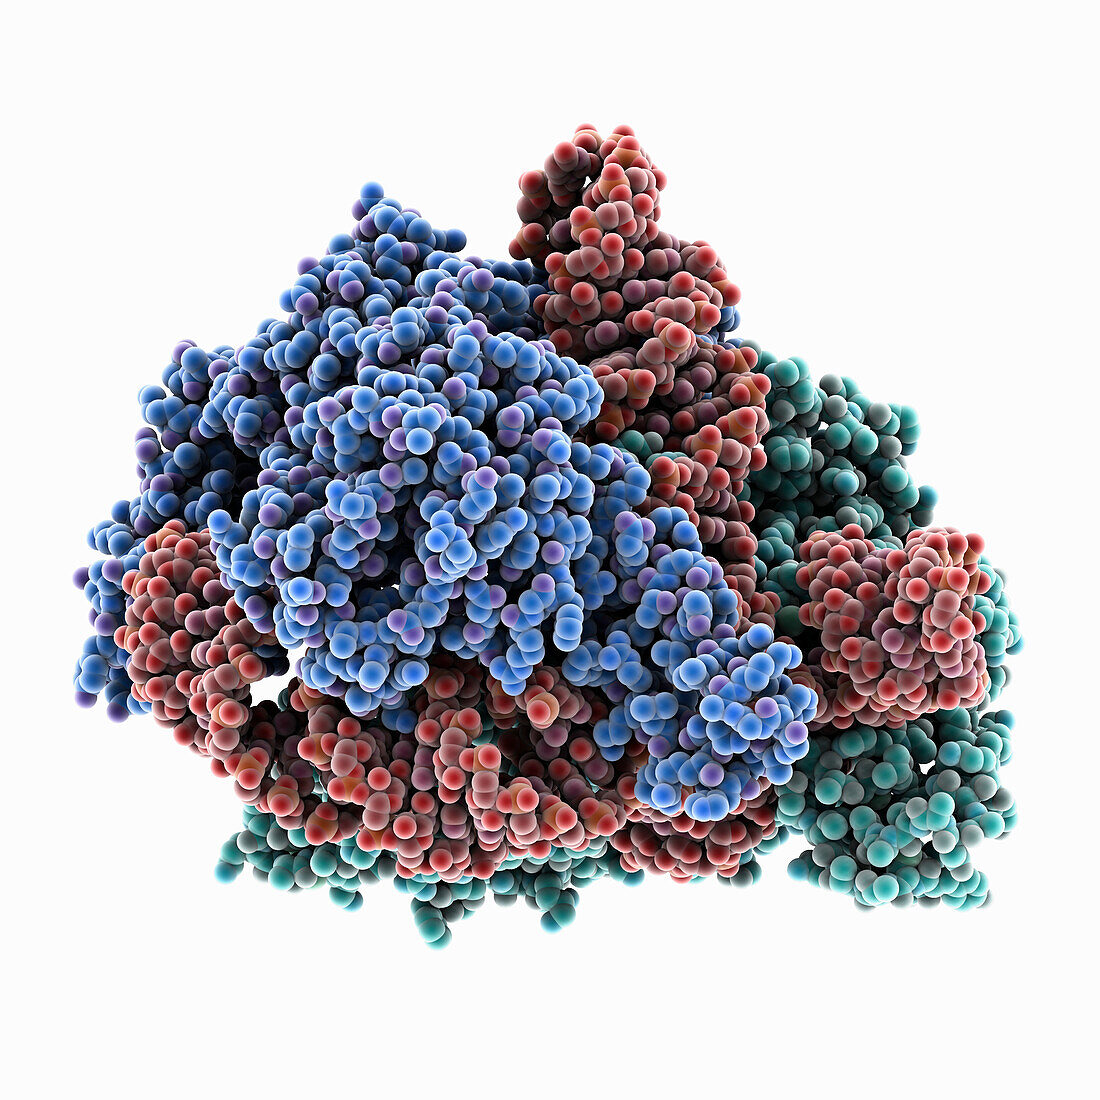 CRISPR-Cas12f binary complex, illustration